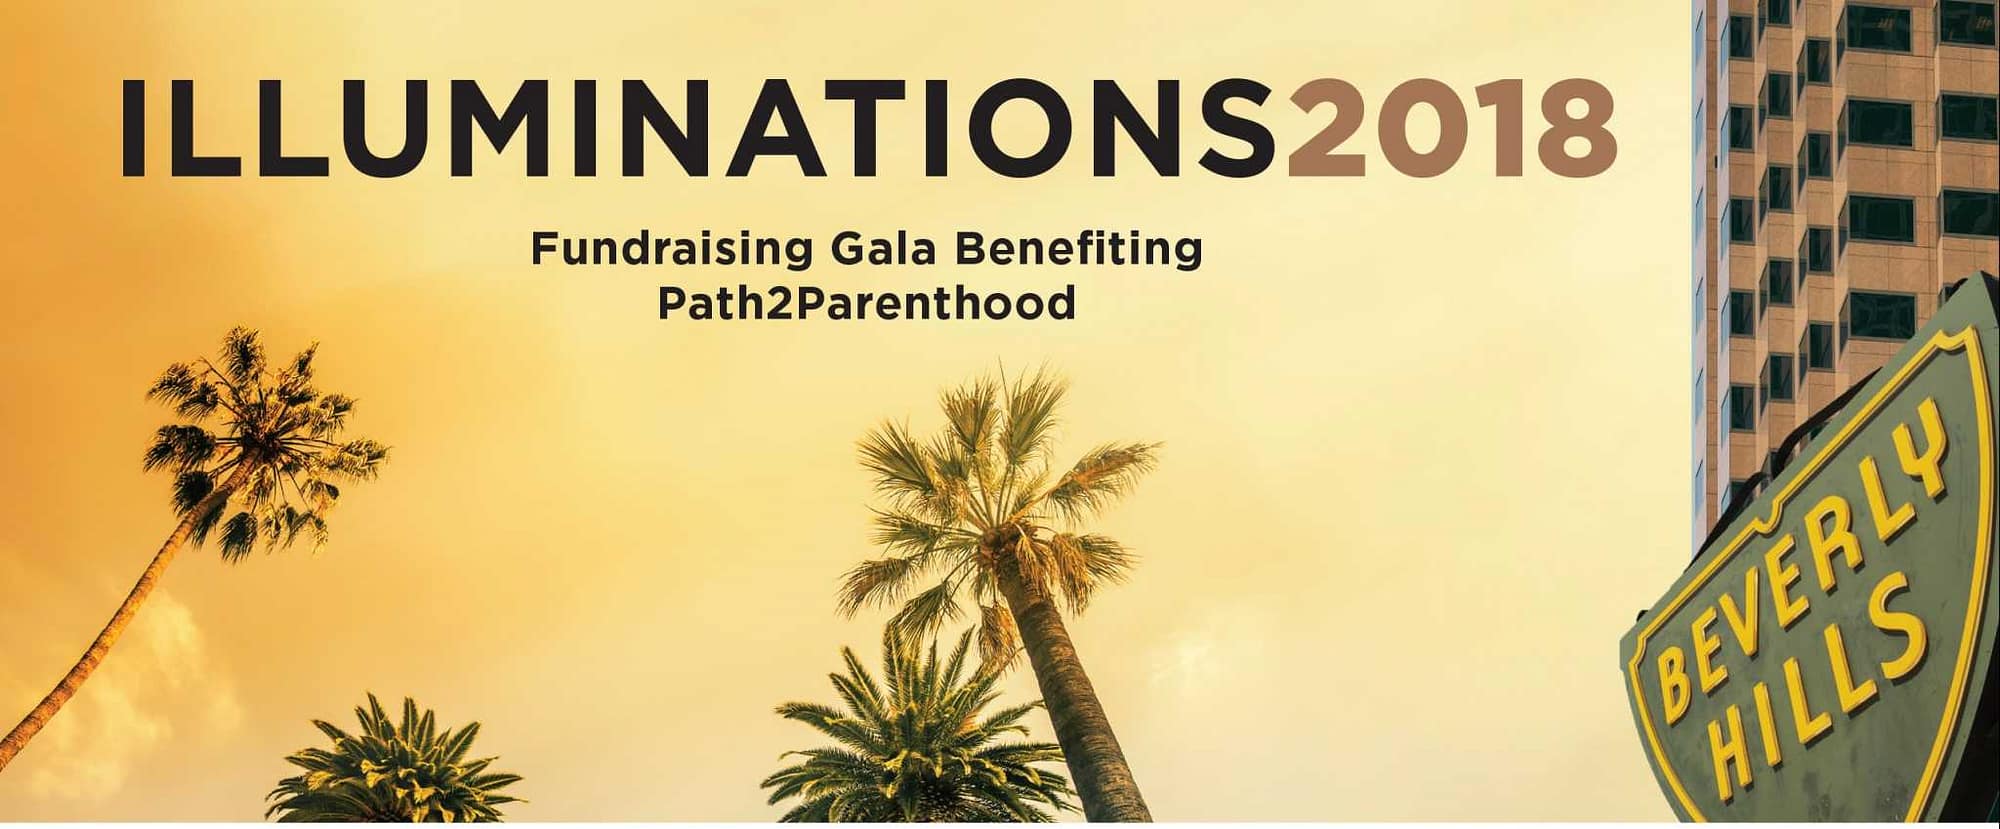 illuminations | fundraising gala for path2parenthood